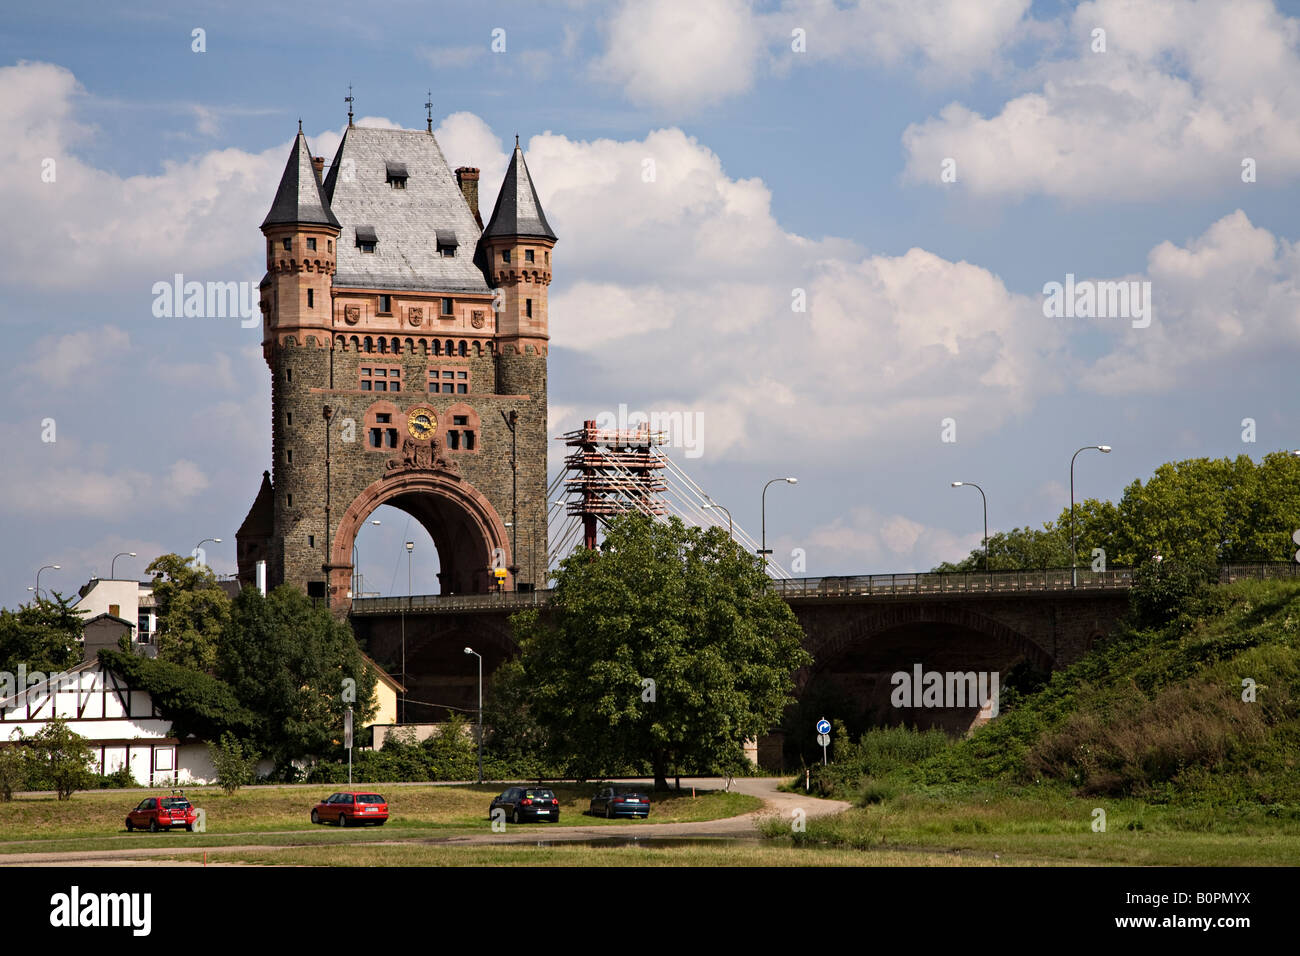 Bruckenturm Bridge Tower Worms Germany Stock Photo